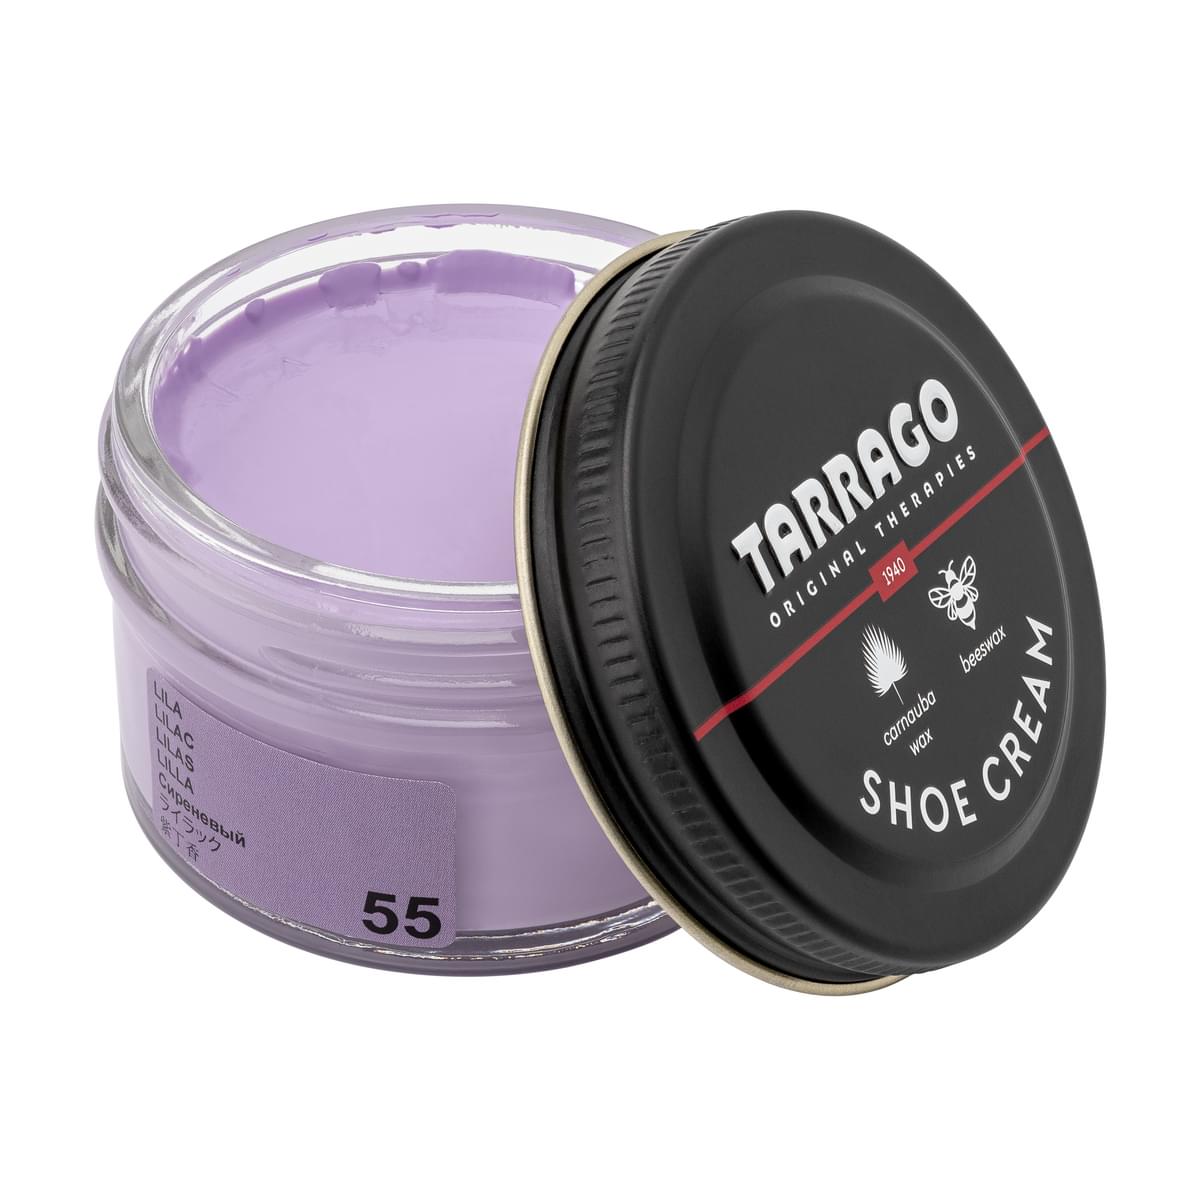 Tarrago Shoe Cream  - Lilac - 55